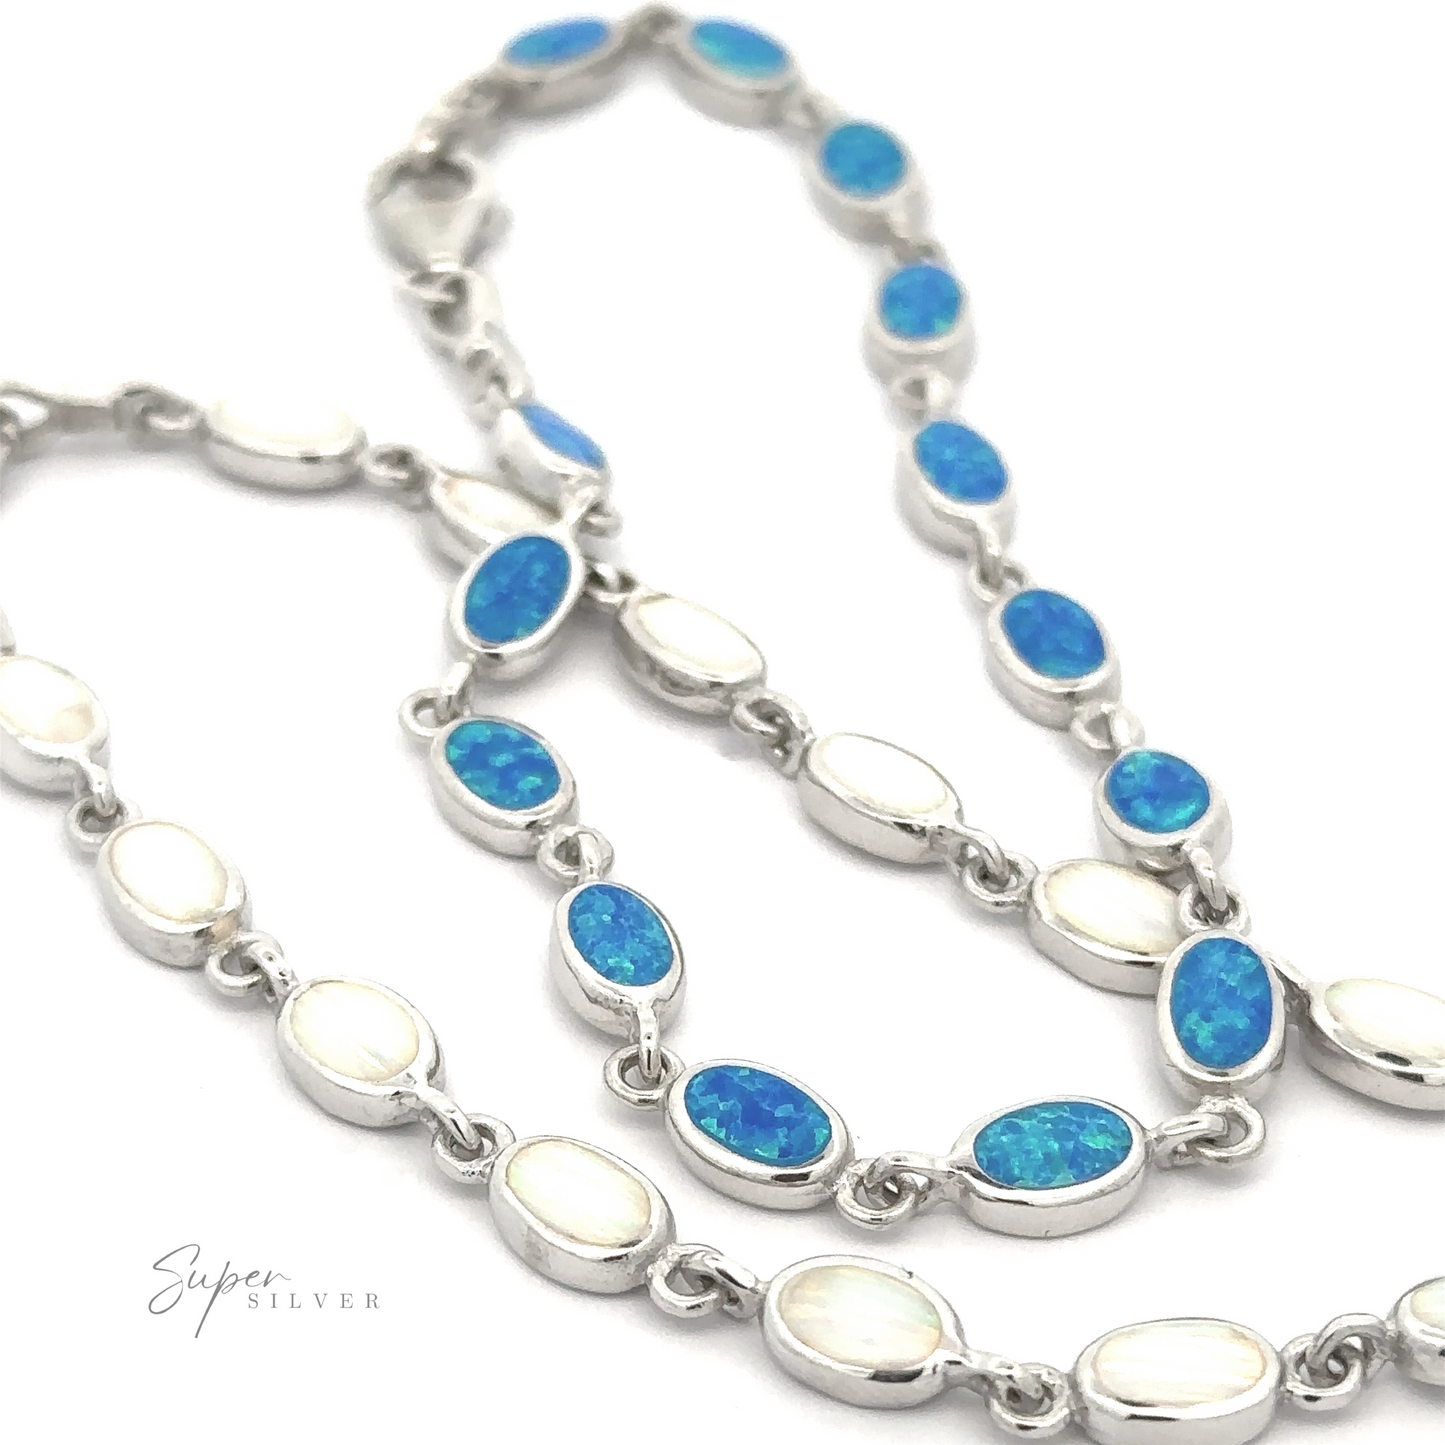 A bracelet with oval opal blue stones.